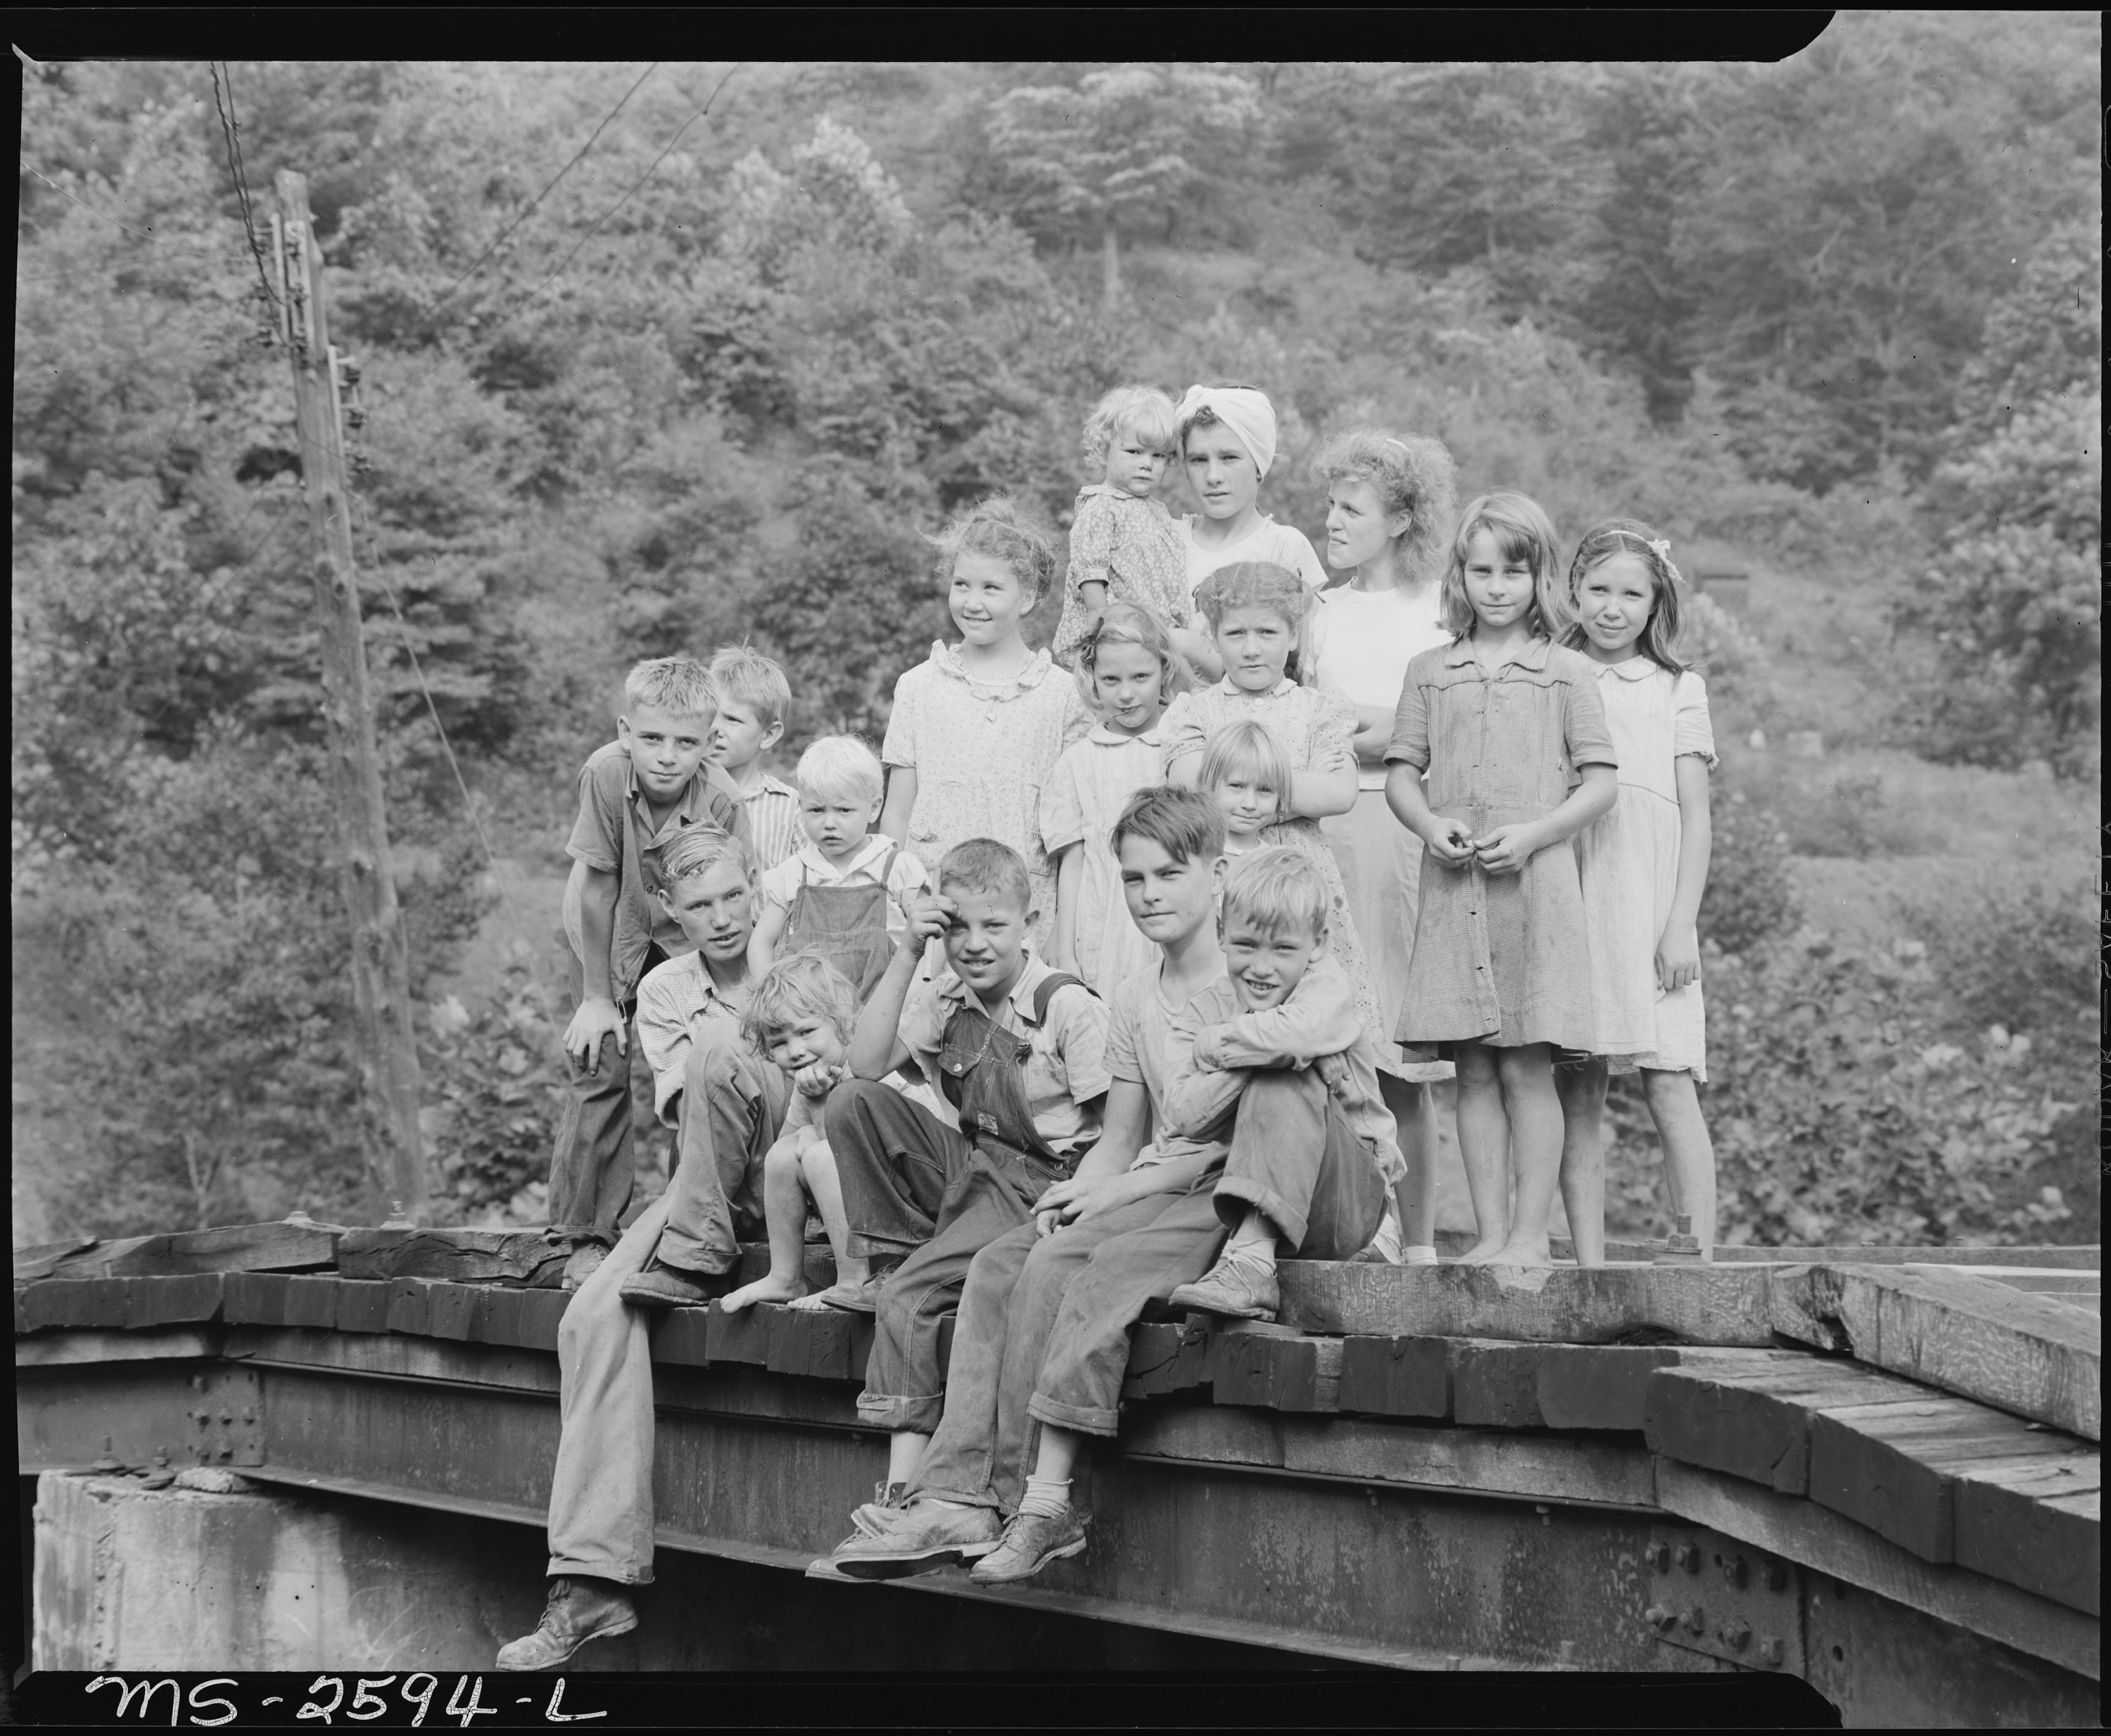 Coal camp children. Dixie Darby Fuel Company, Marne Mine, Lejunior, Harlan County, Kentucky. - NARA - 541323